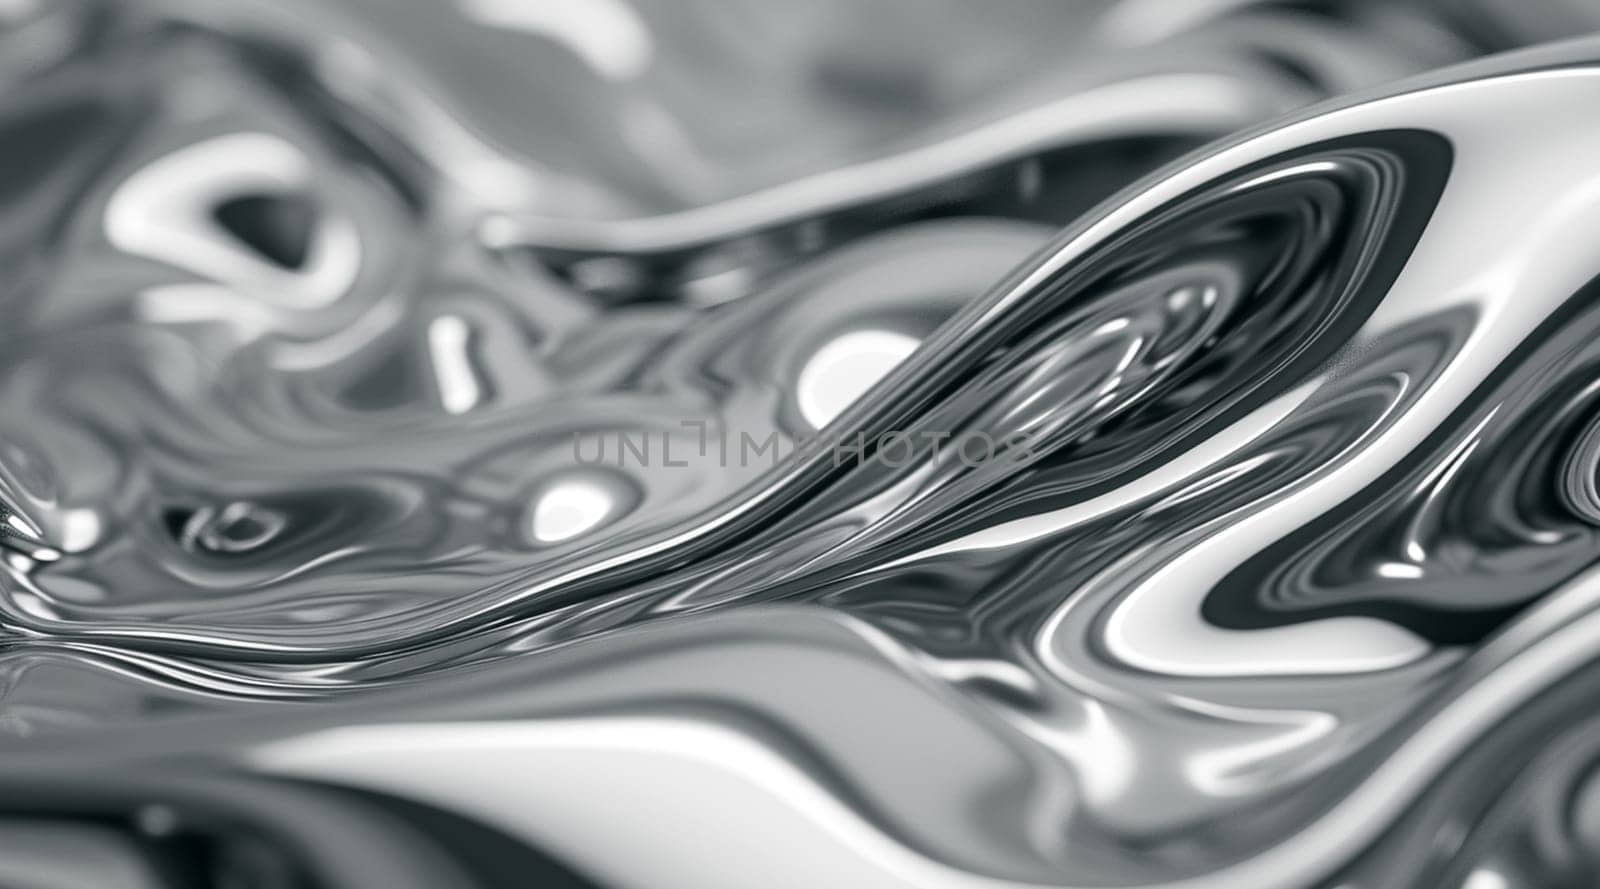 Melting metal texture close up. Melty metallics by kizuneko